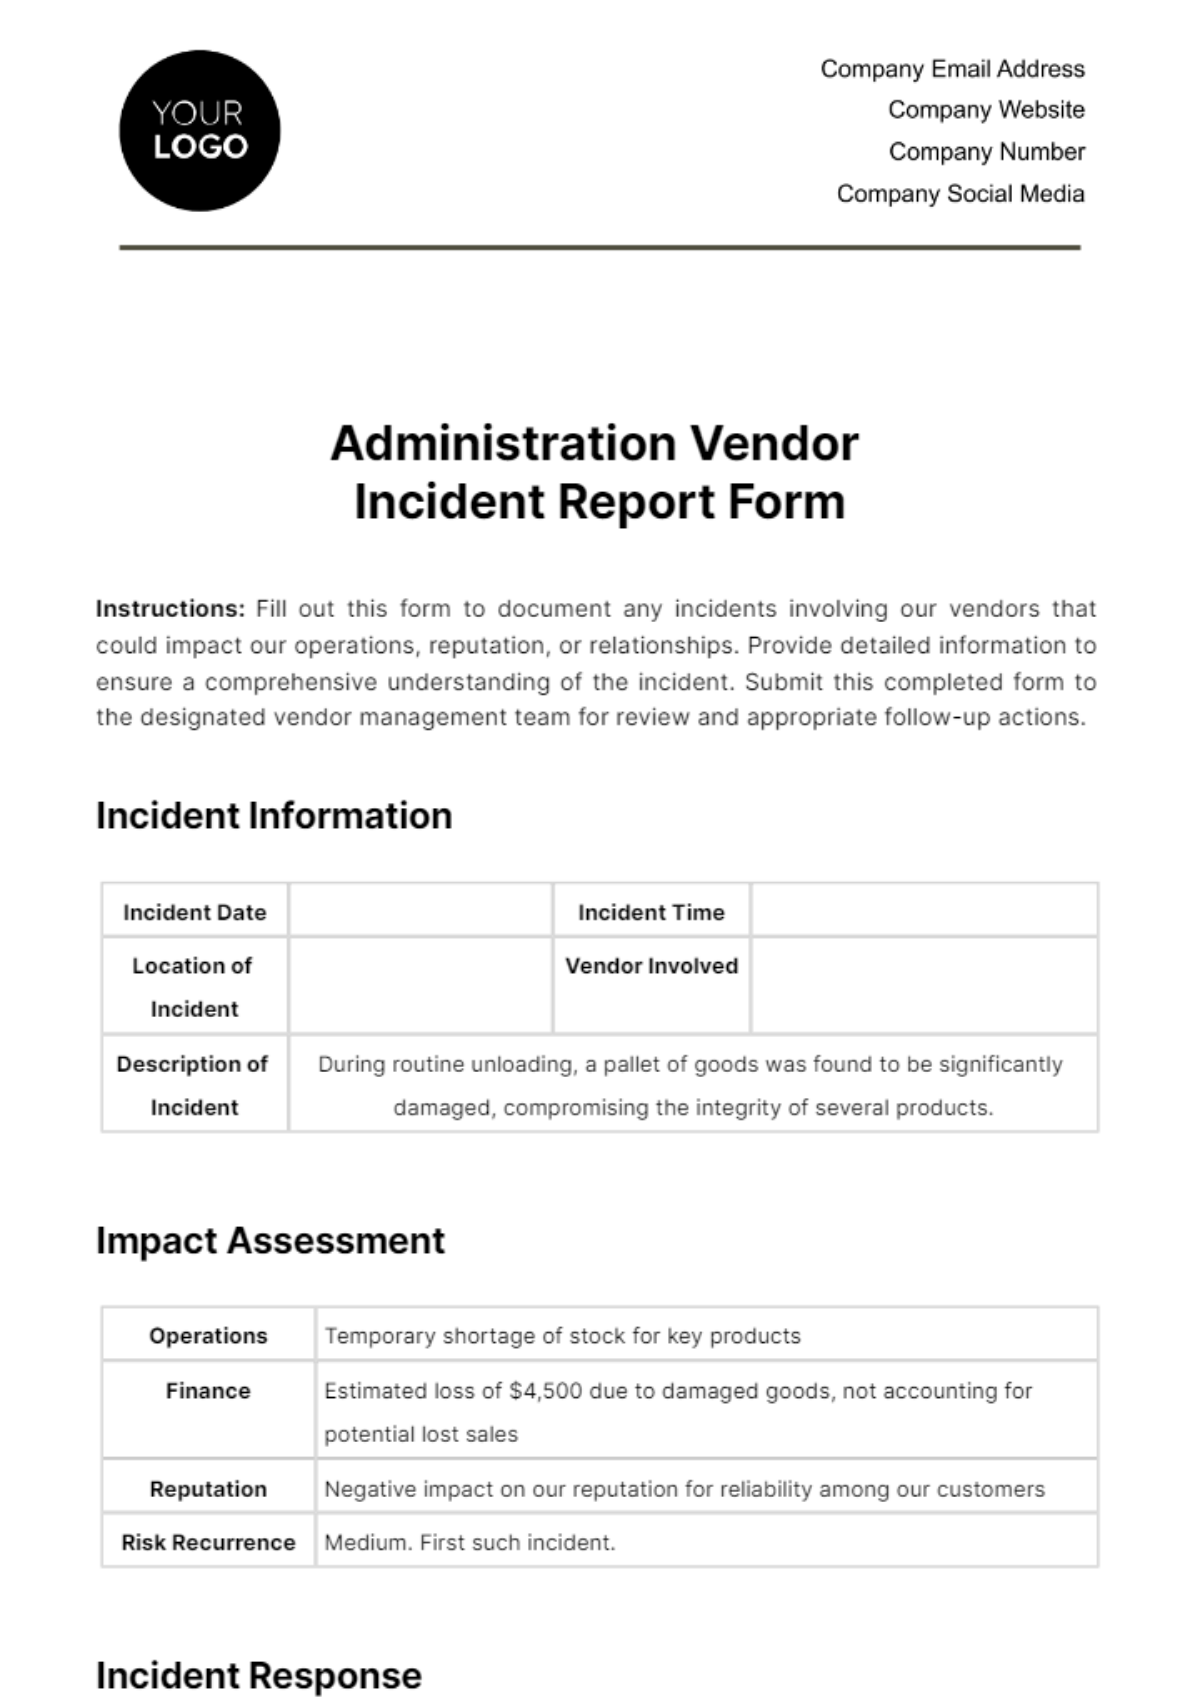 Free Administration Vendor Incident Report Form Template